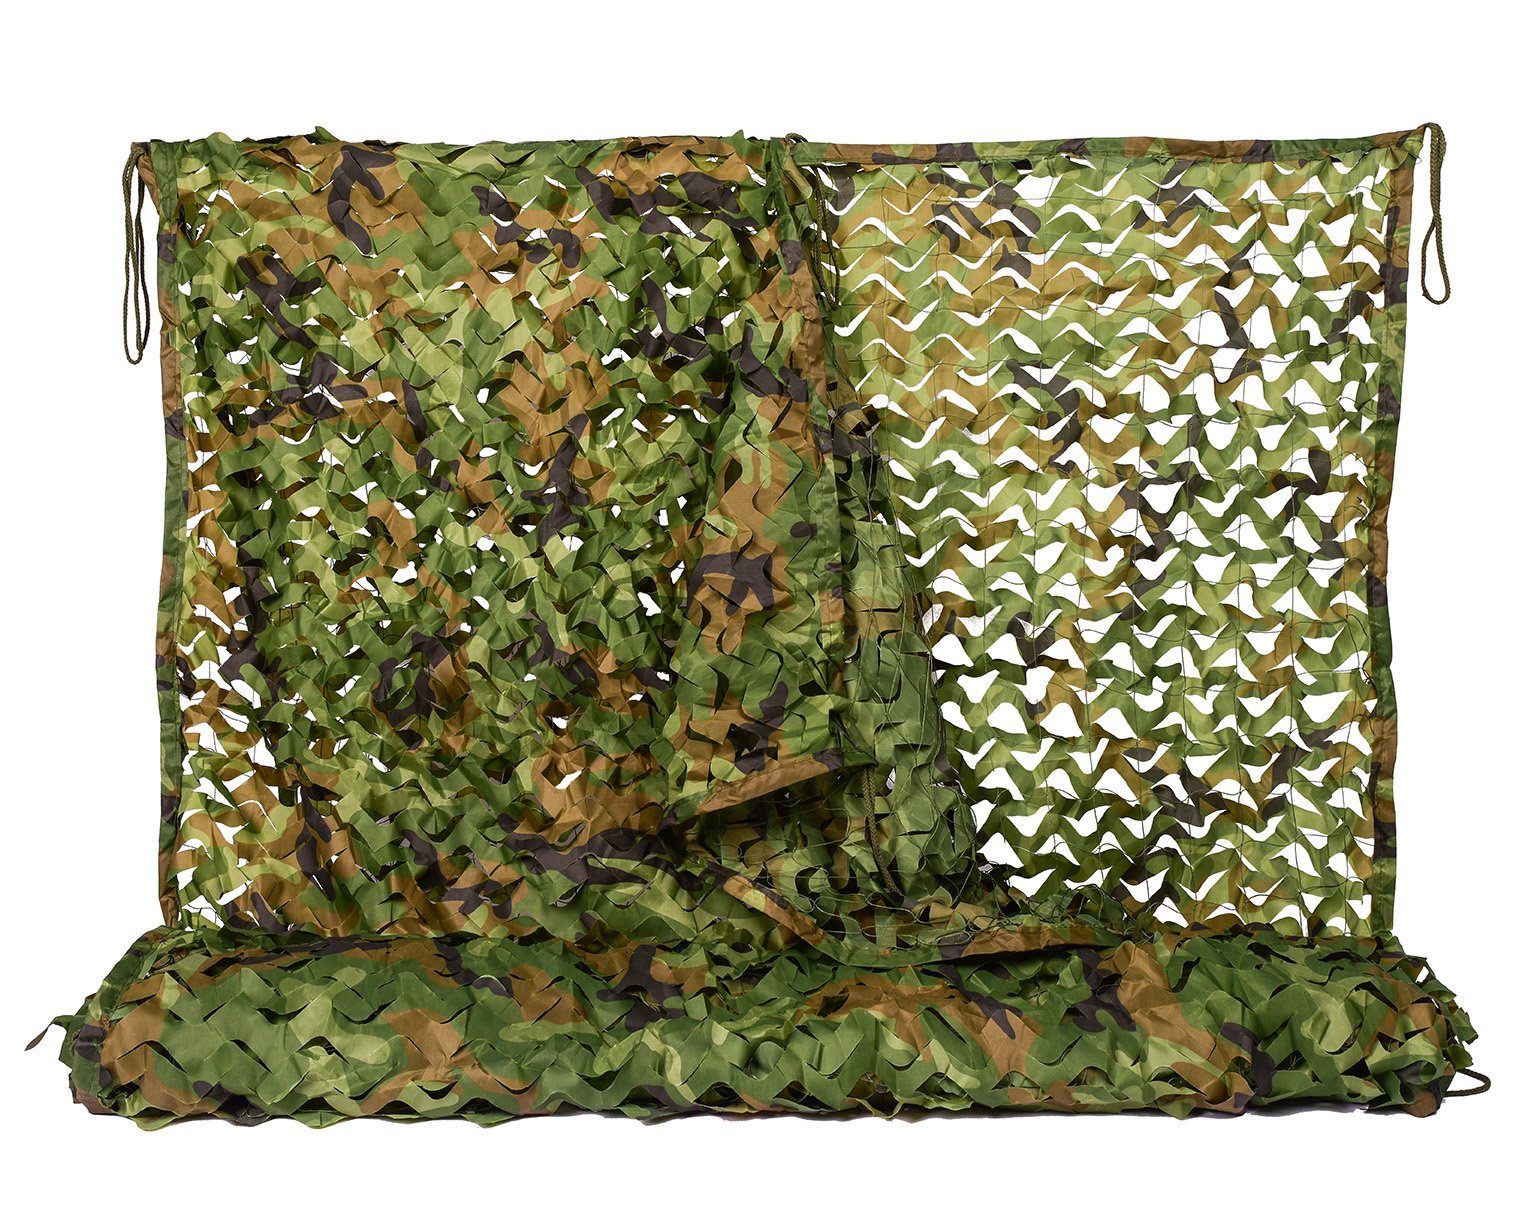 NINAT Woodland Camo Netting Camouflage Net with Nylon Mesh Net 3 x